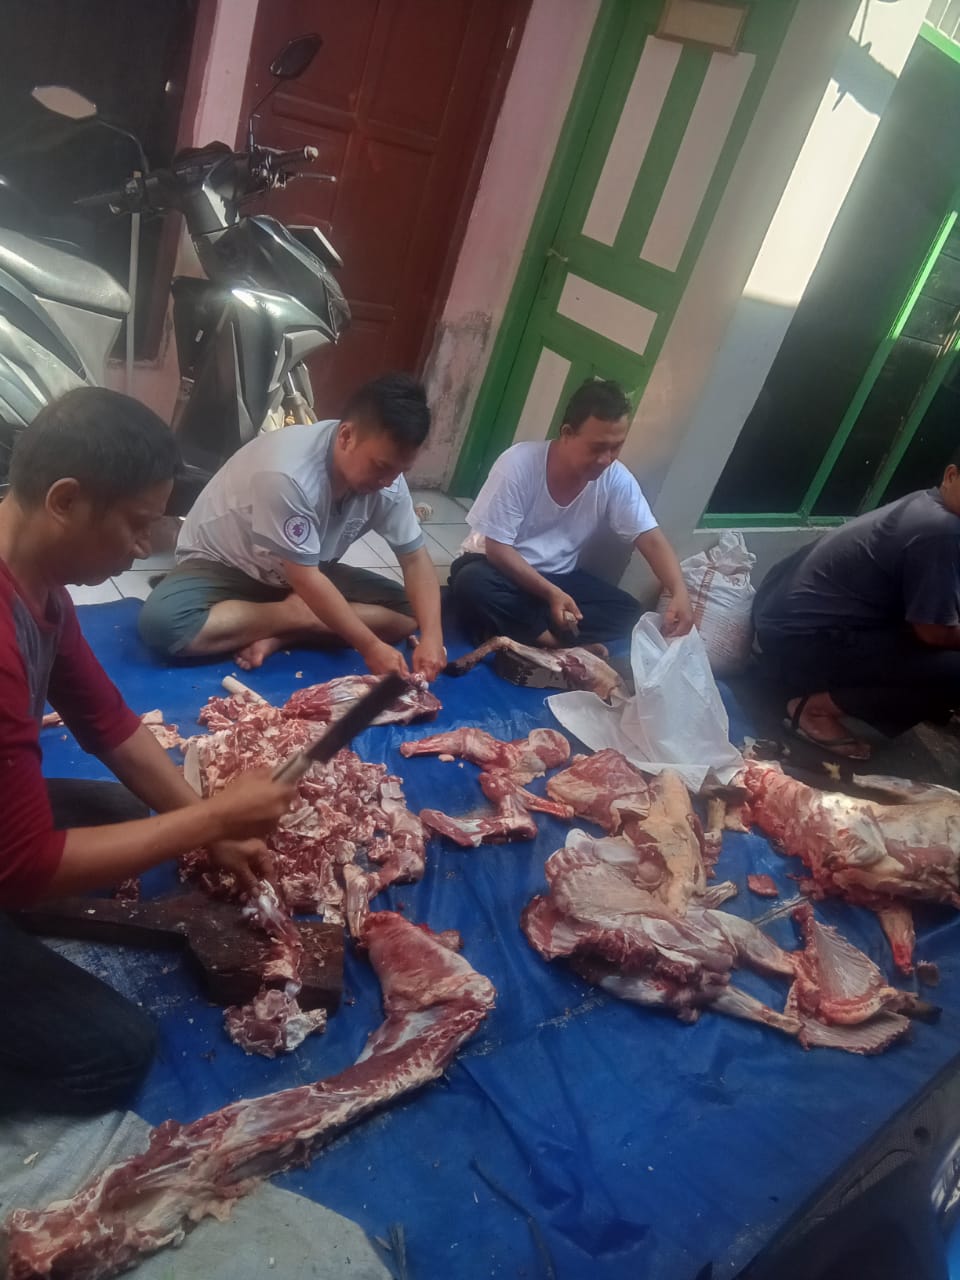 Panitia Qurban Wilayah Rt. 004/Rw. 09, Kelurahan Kramat Jati, Jakarta Timur Membagikan Daging Qurban dengan Adil dan Merata